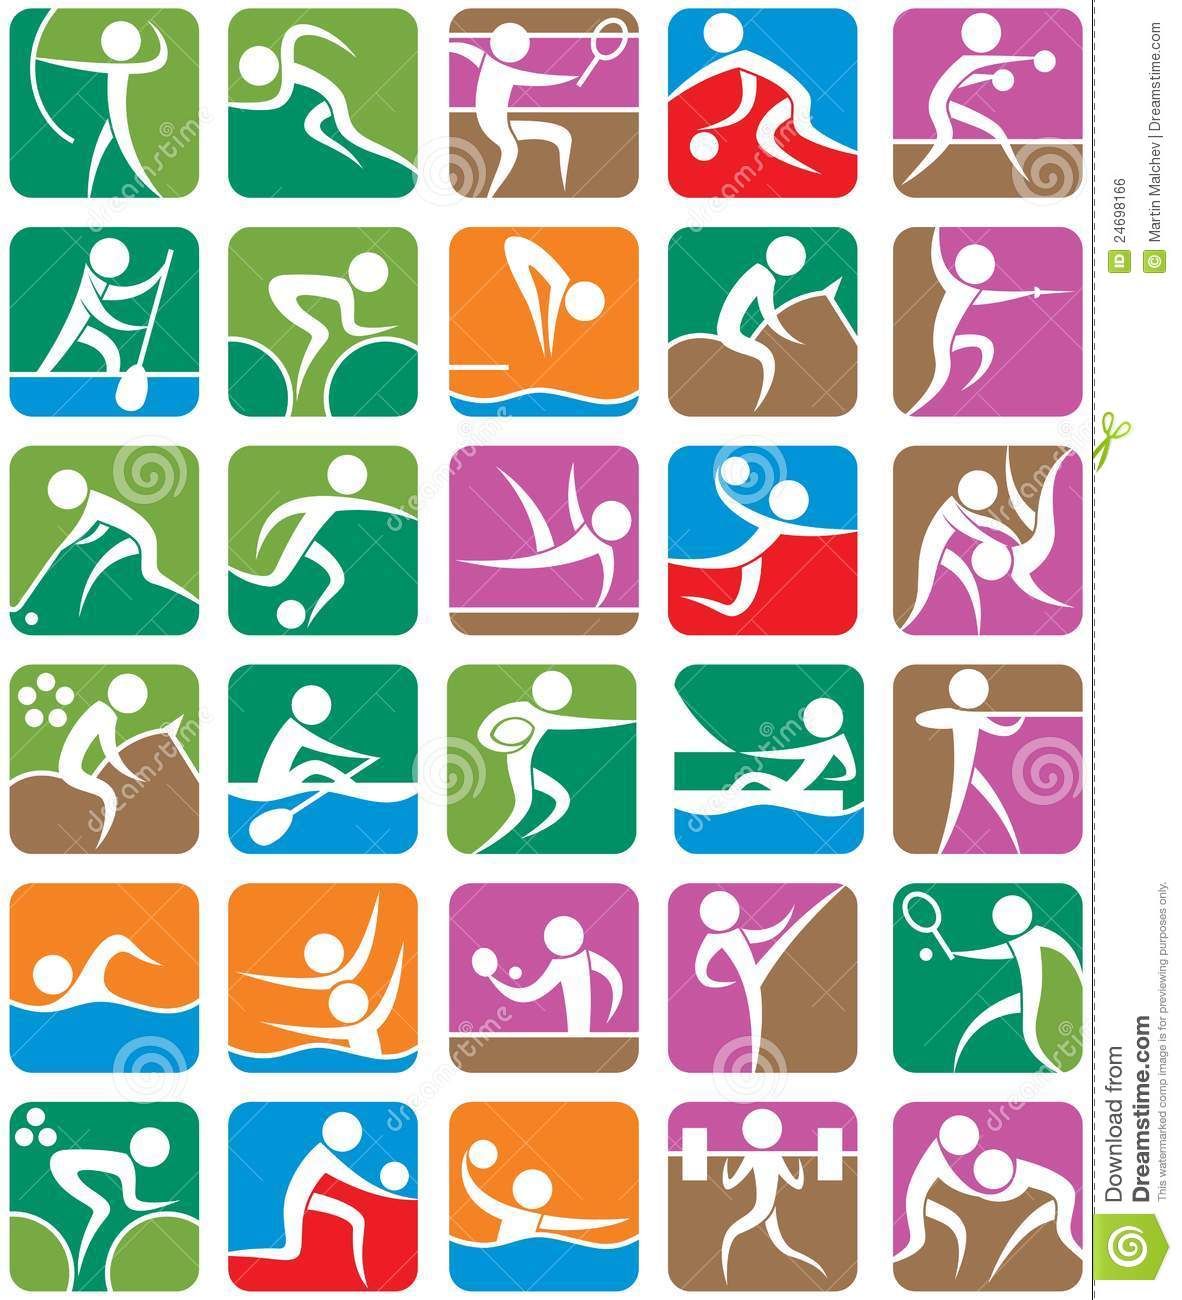 Summer Sports Symbols   Colorful Royalty Free Stock Image   Image    